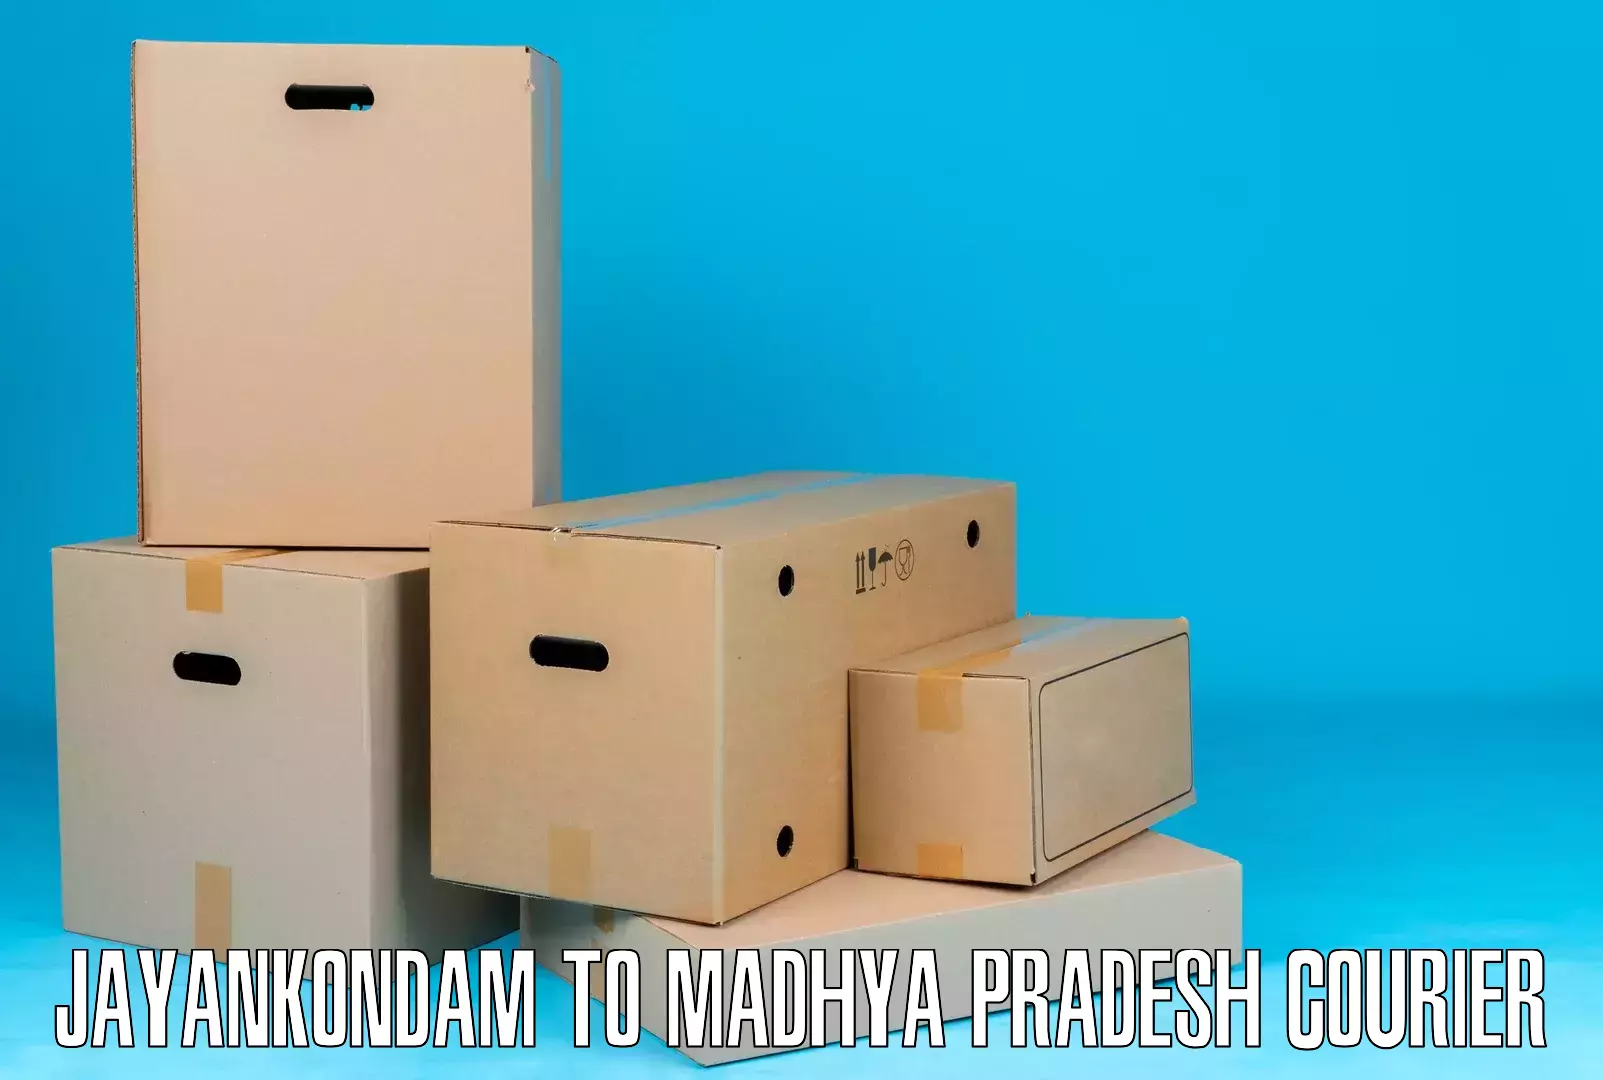 Quality courier partnerships Jayankondam to Madhya Pradesh